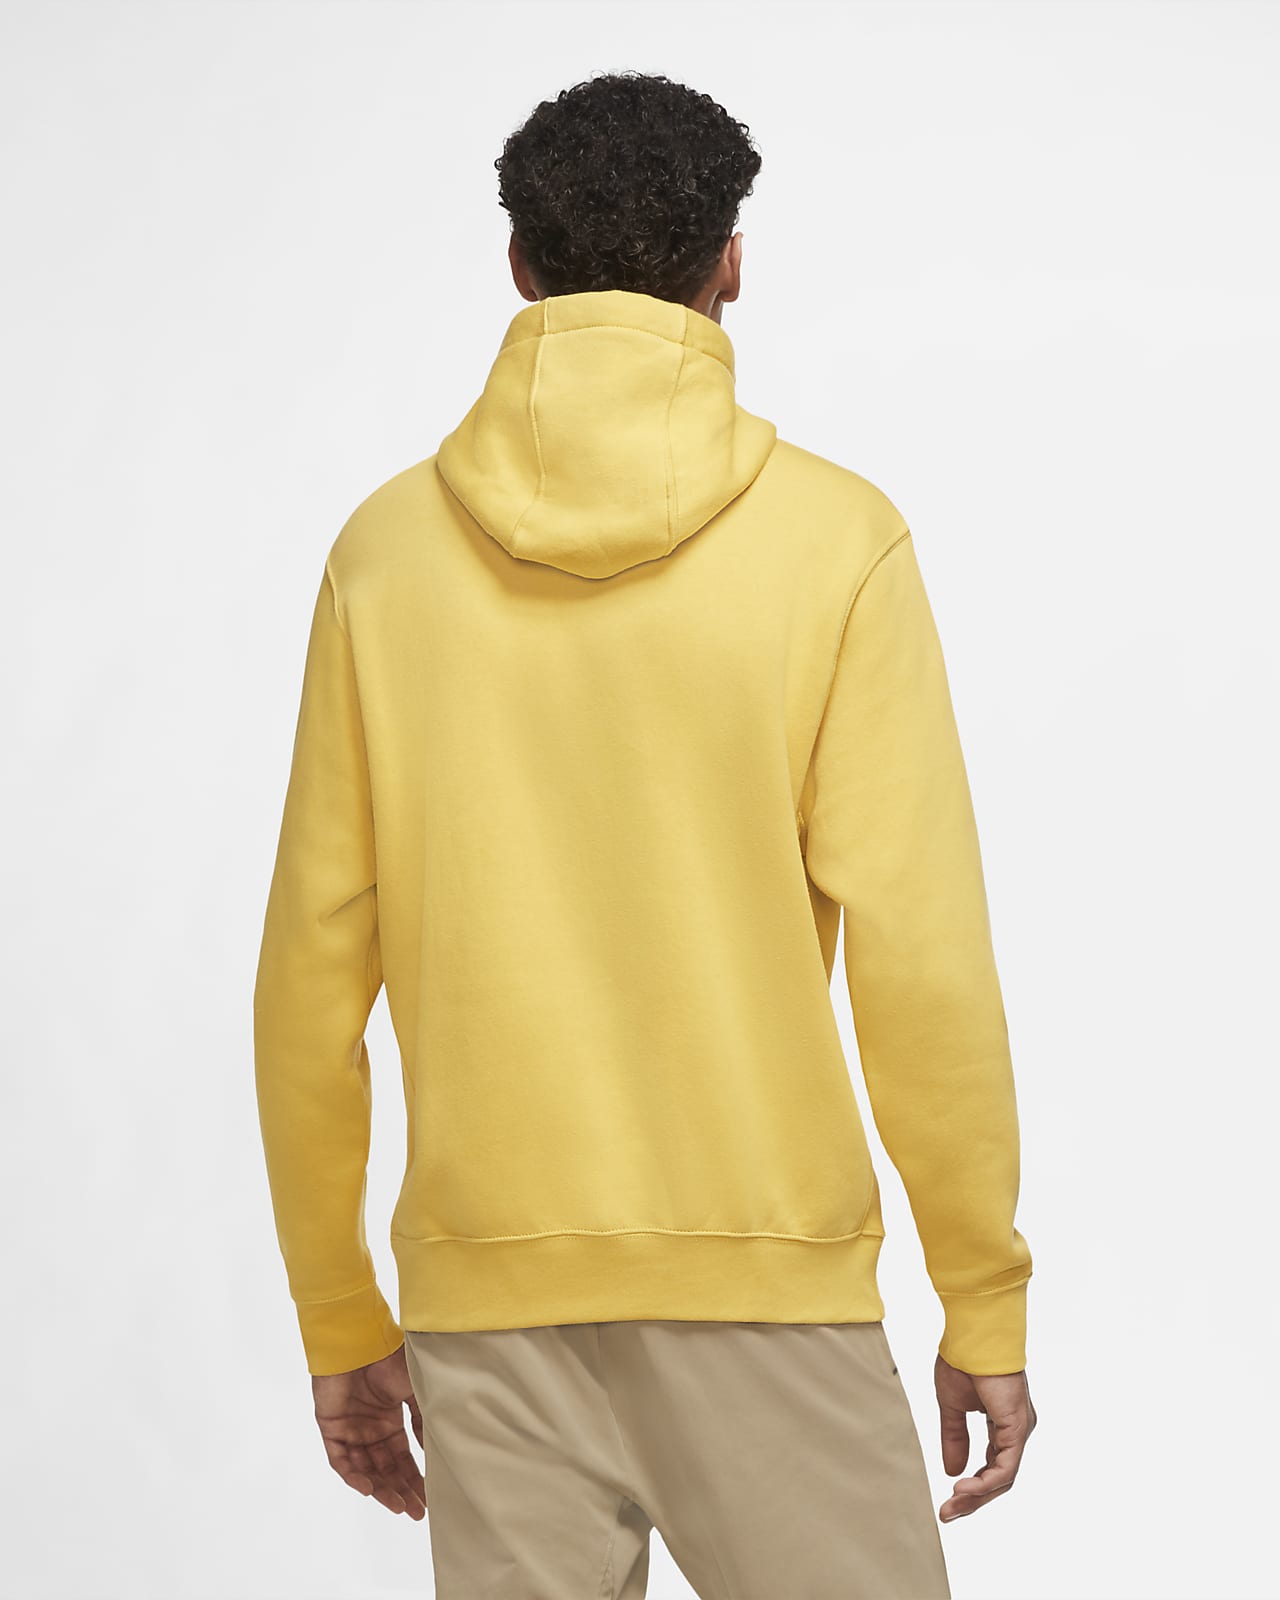 yellow nike hoodie and sweatpants set